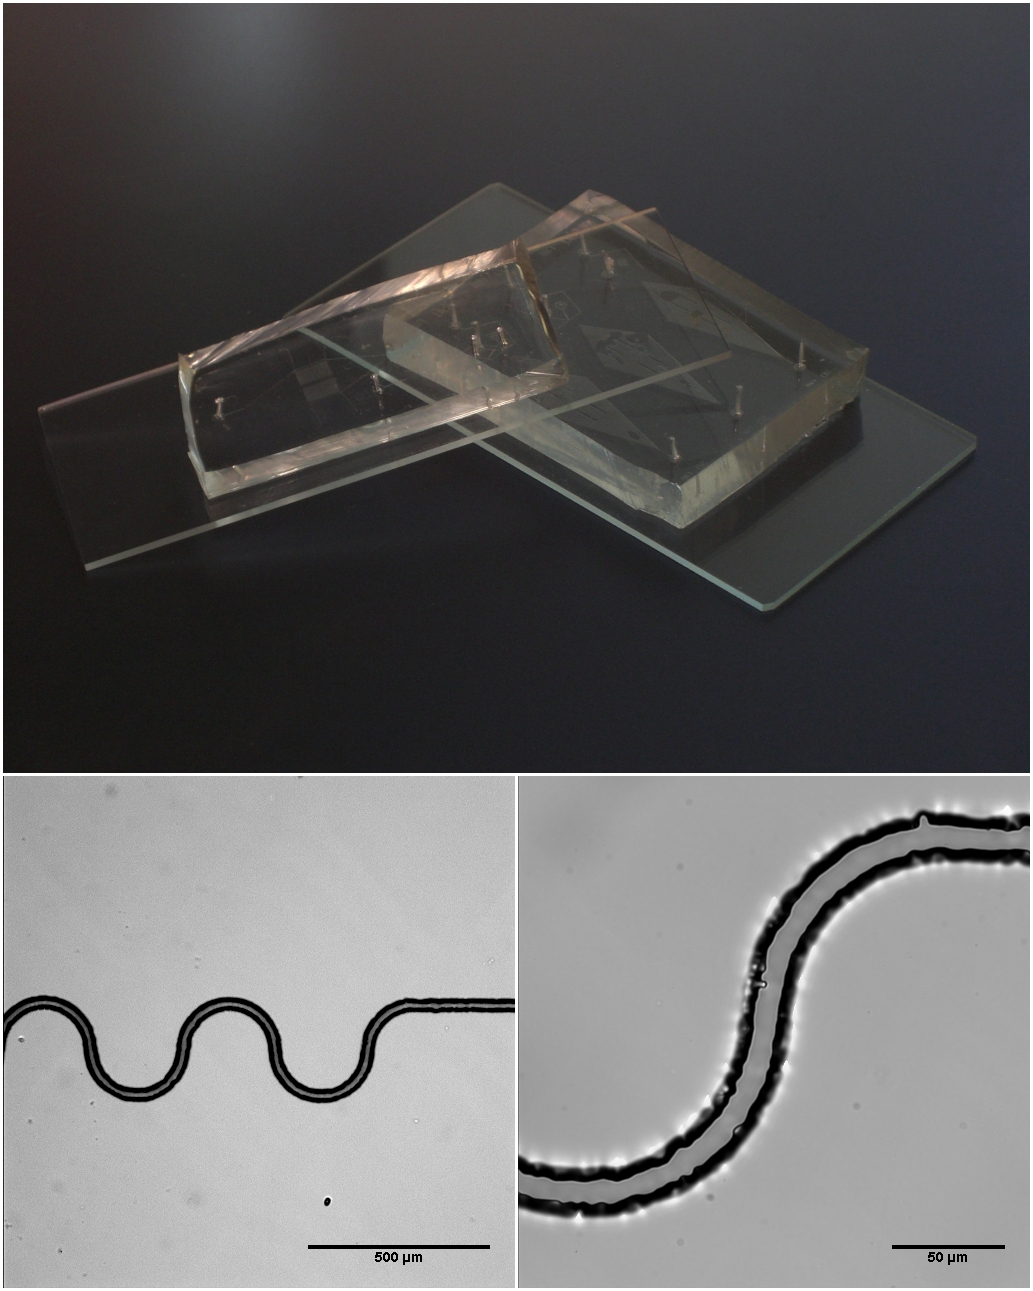 microfluidics